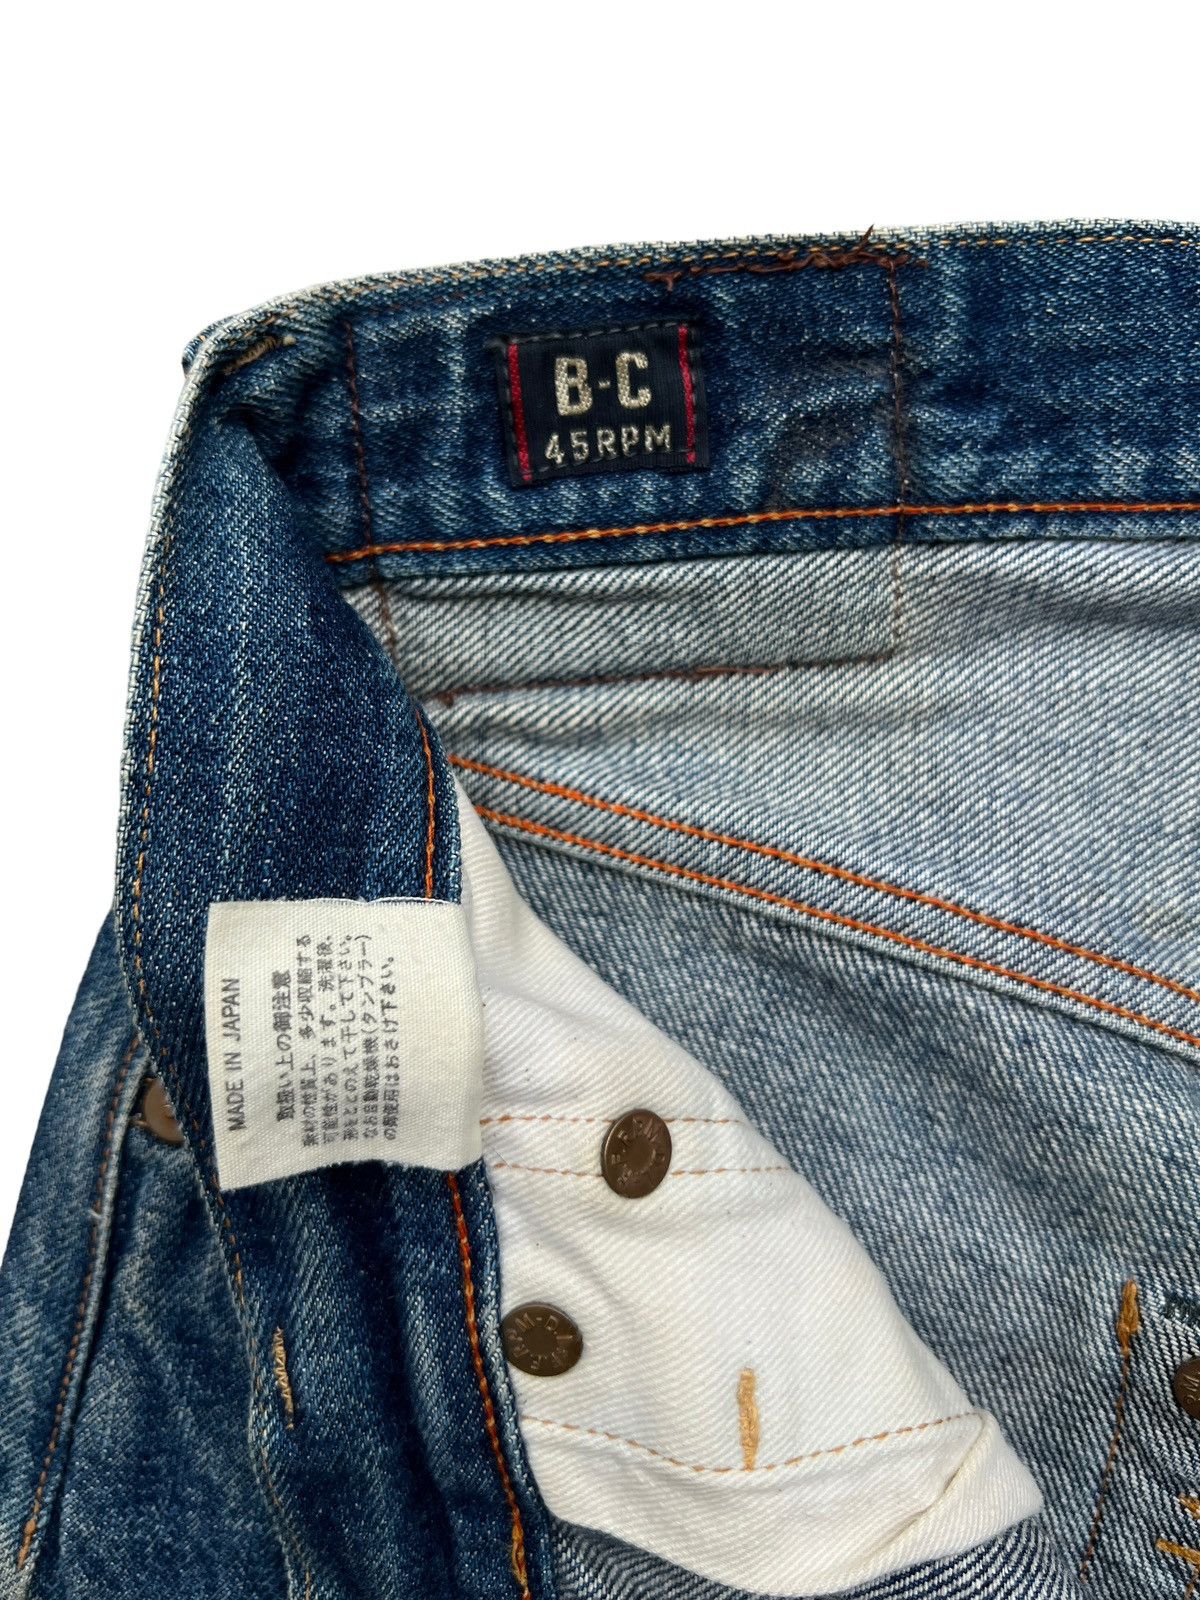 Vintage 45Rpm Selvedge Faded Distressed Denim Jeans 29x29 - 15